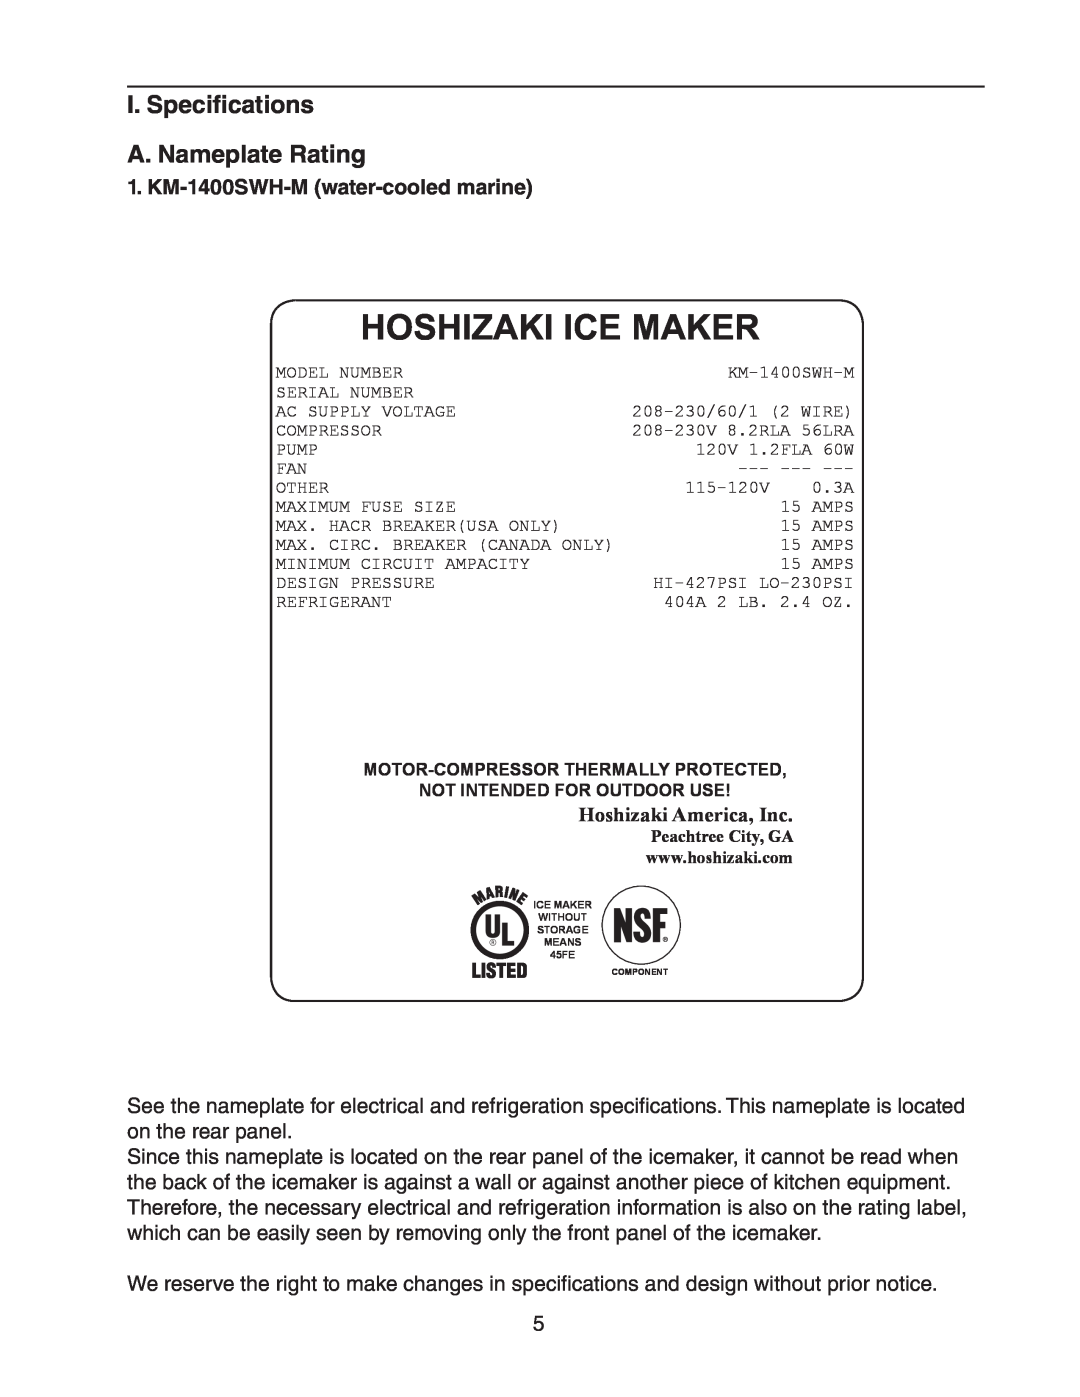 Hoshizaki KM-1400SWH/3-M Hoshizaki Ice Maker, I. Specifications A. Nameplate Rating, KM-1400SWH-M water-cooledmarine 